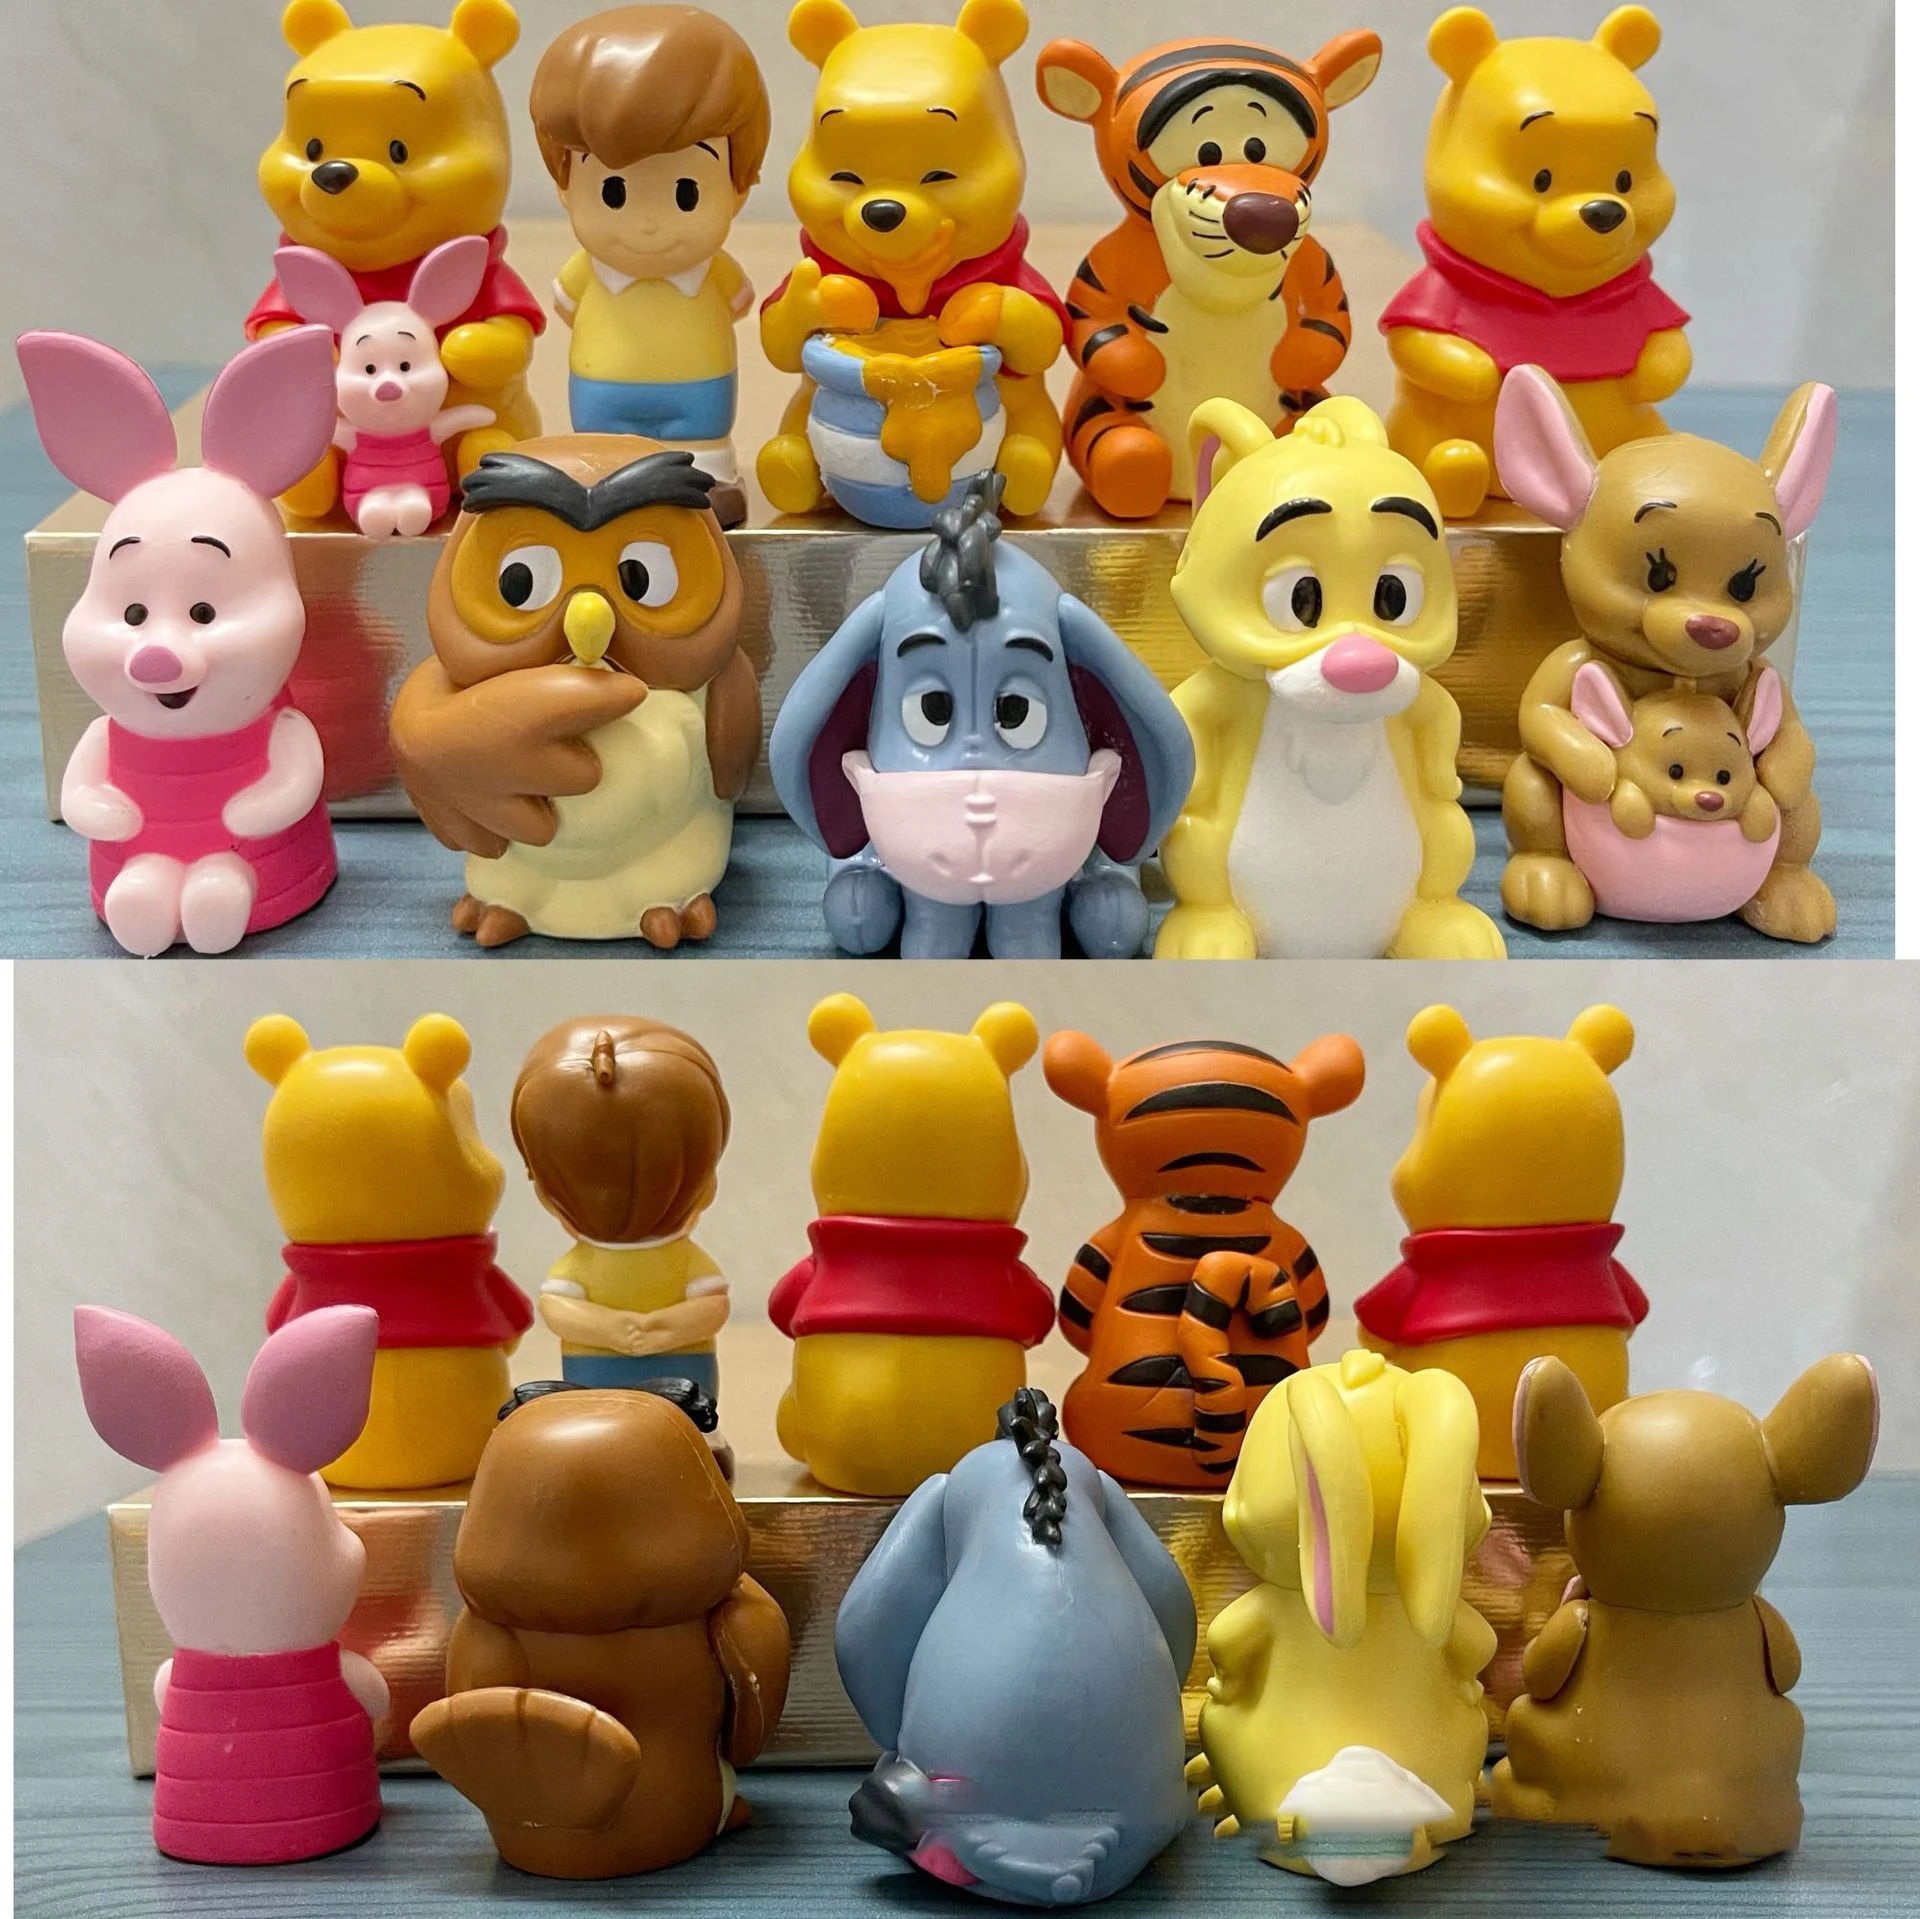 

10pcs Disney Winnie the Pooh Tigger Piggy Eeyore Collectible Model Figurine Cartoon Figures Doll Christmas Gift Toy for Children